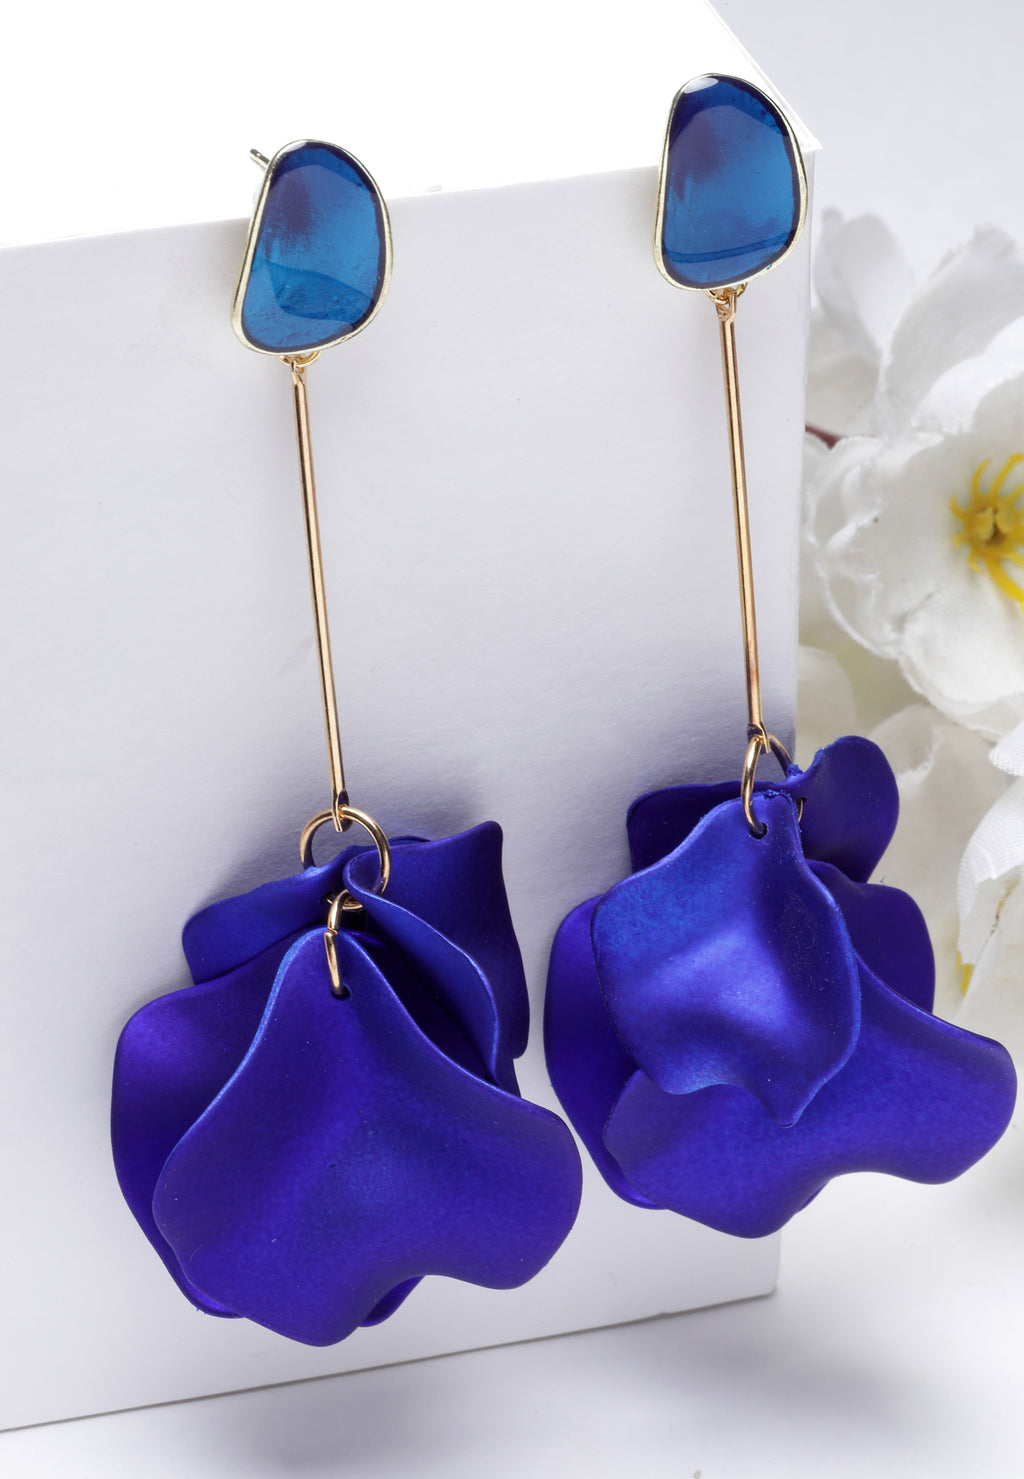 Metallisch blaue Blütenblatt-Ohrhänger